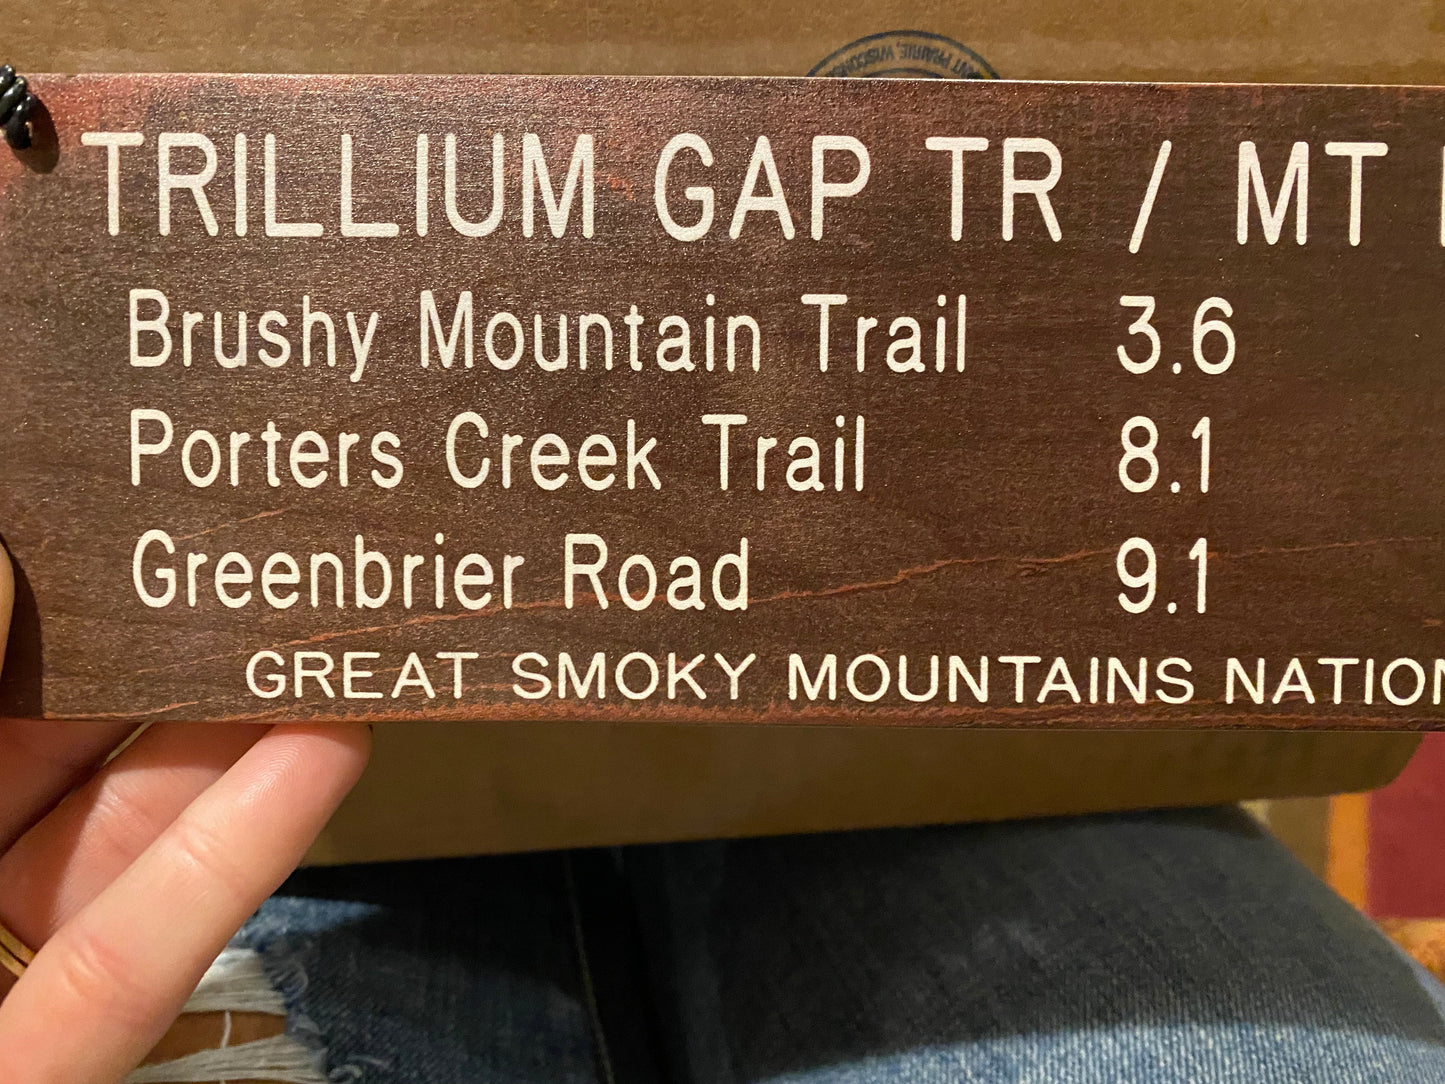 Chimney Tops Trail Marker.